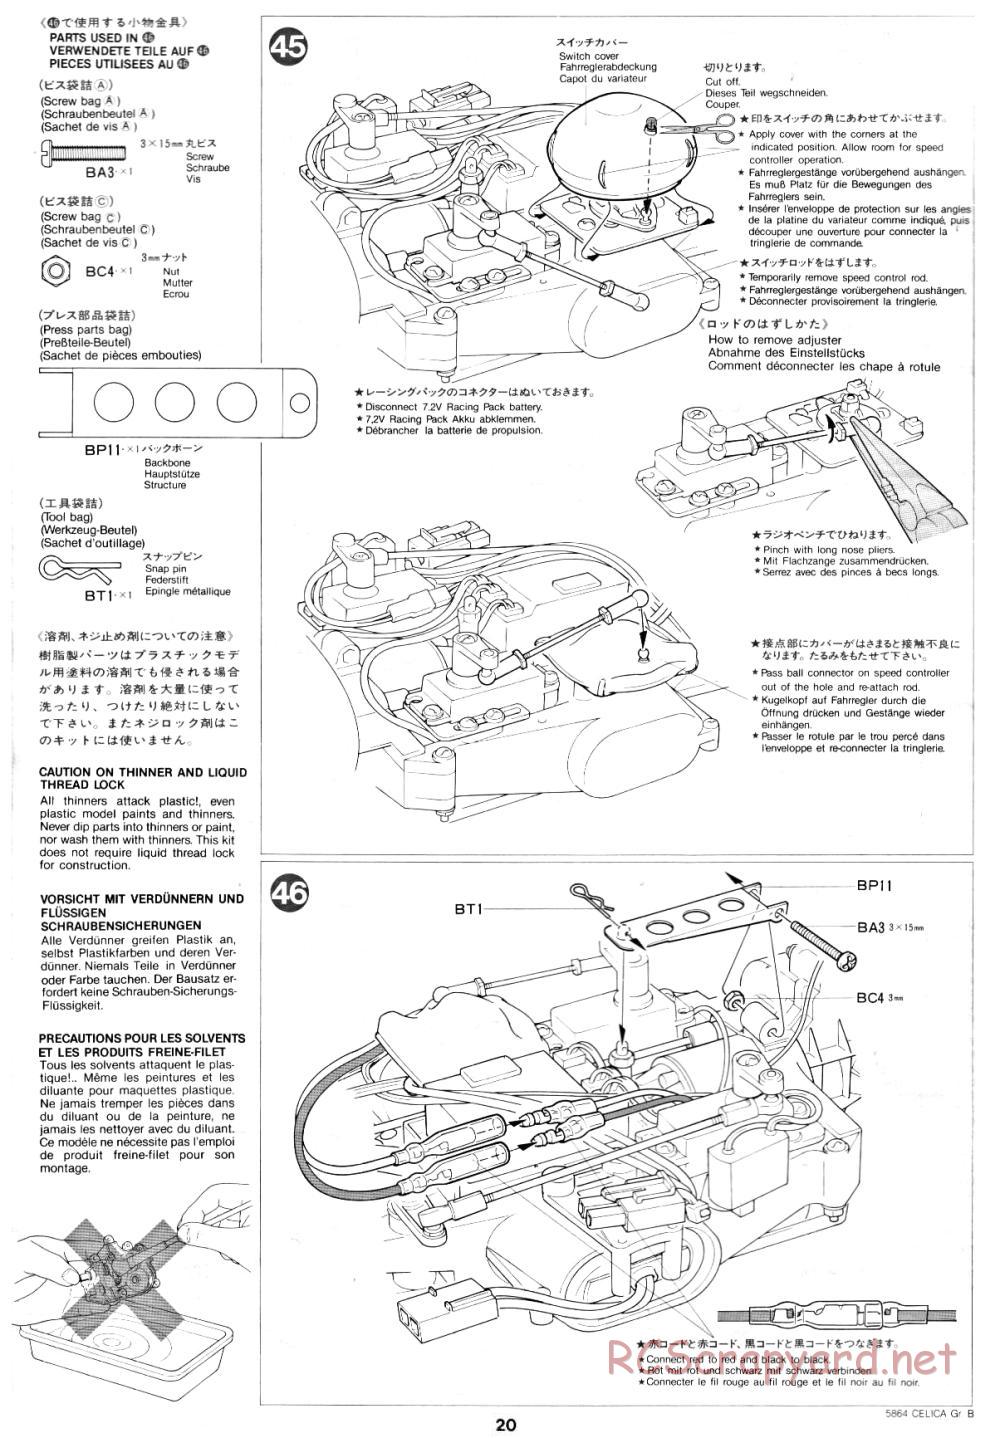 Tamiya - Toyota Celica Gr.B Rally Special - 58064 - Manual - Page 20